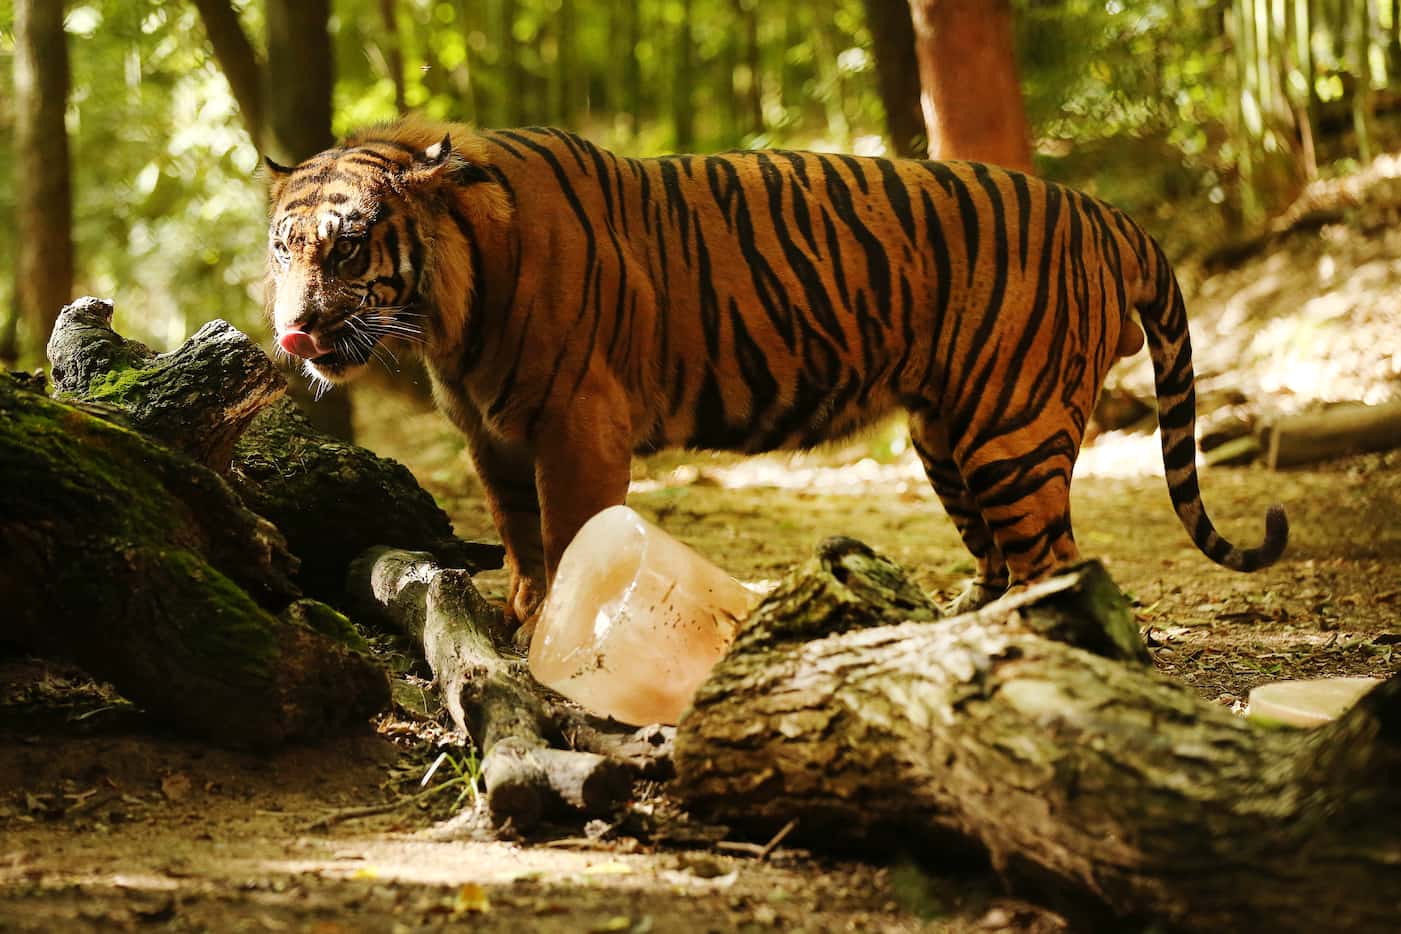 Manis, a sumatran tiger, stood near a frozen enrichment treat at the Dallas Zoo last June....